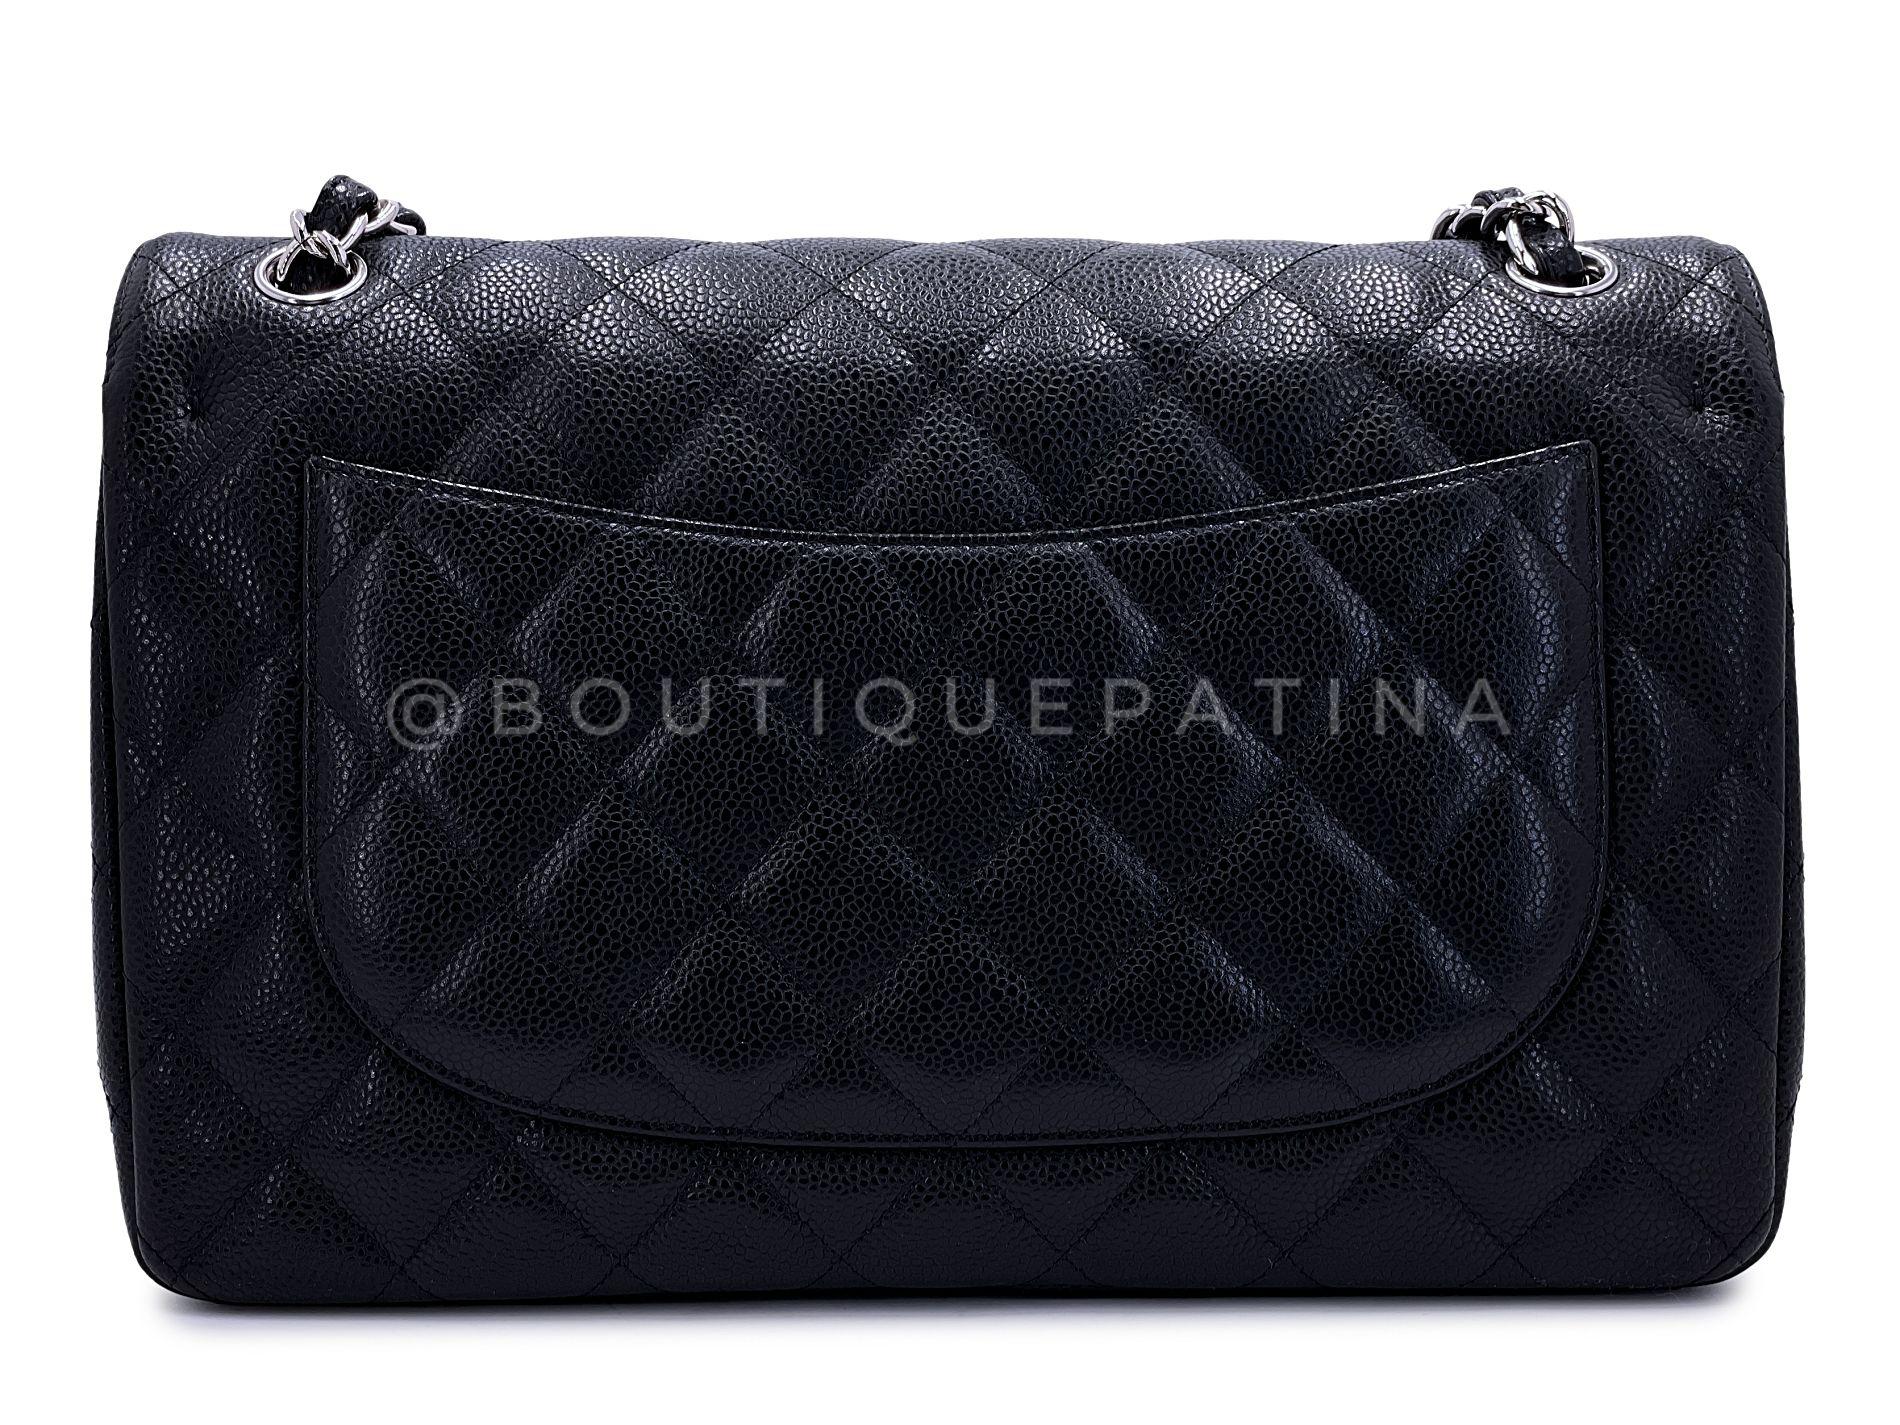 Chanel Black Caviar Jumbo Classic Double Flap Bag SHW 66170 For Sale 1